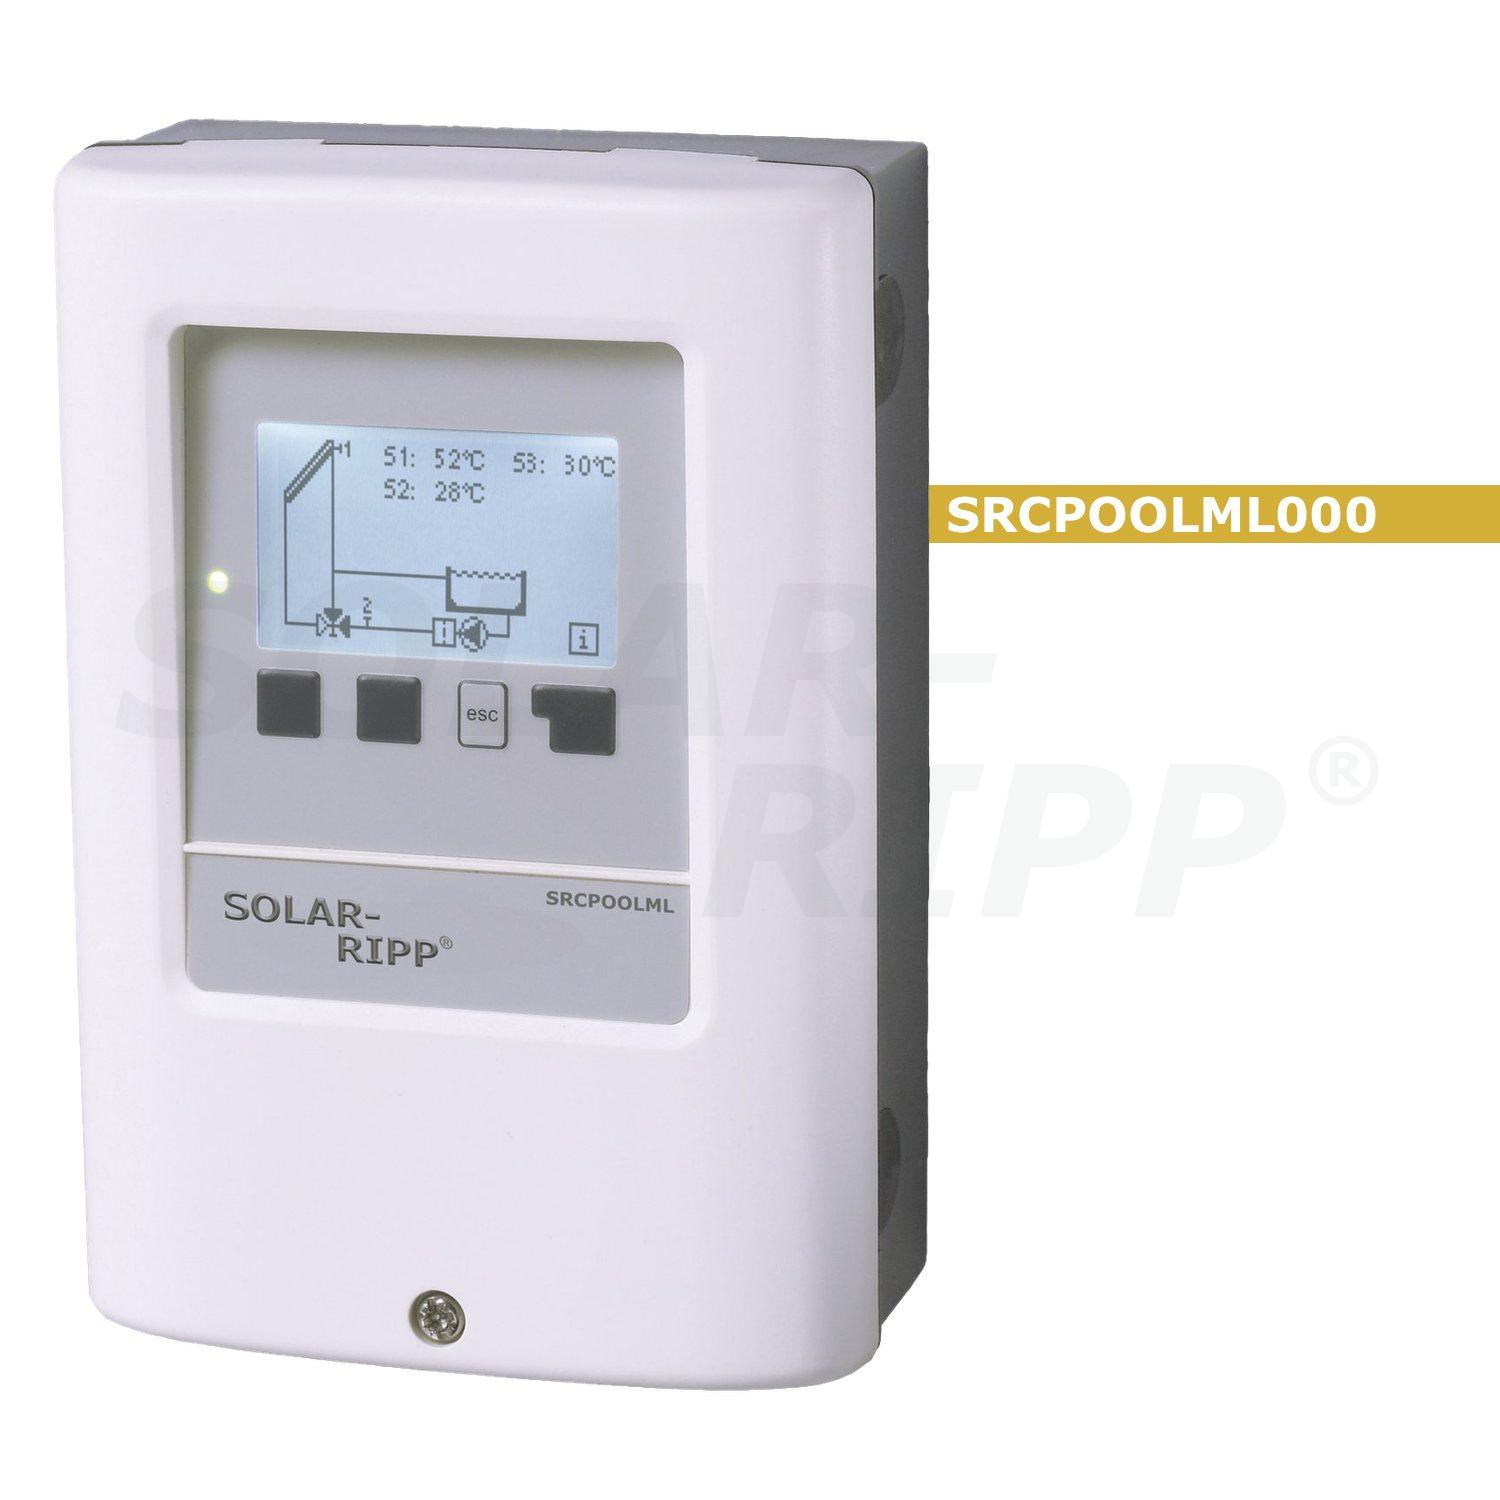 SOLAR-RIPP ® solar controller SRCPOOLML000